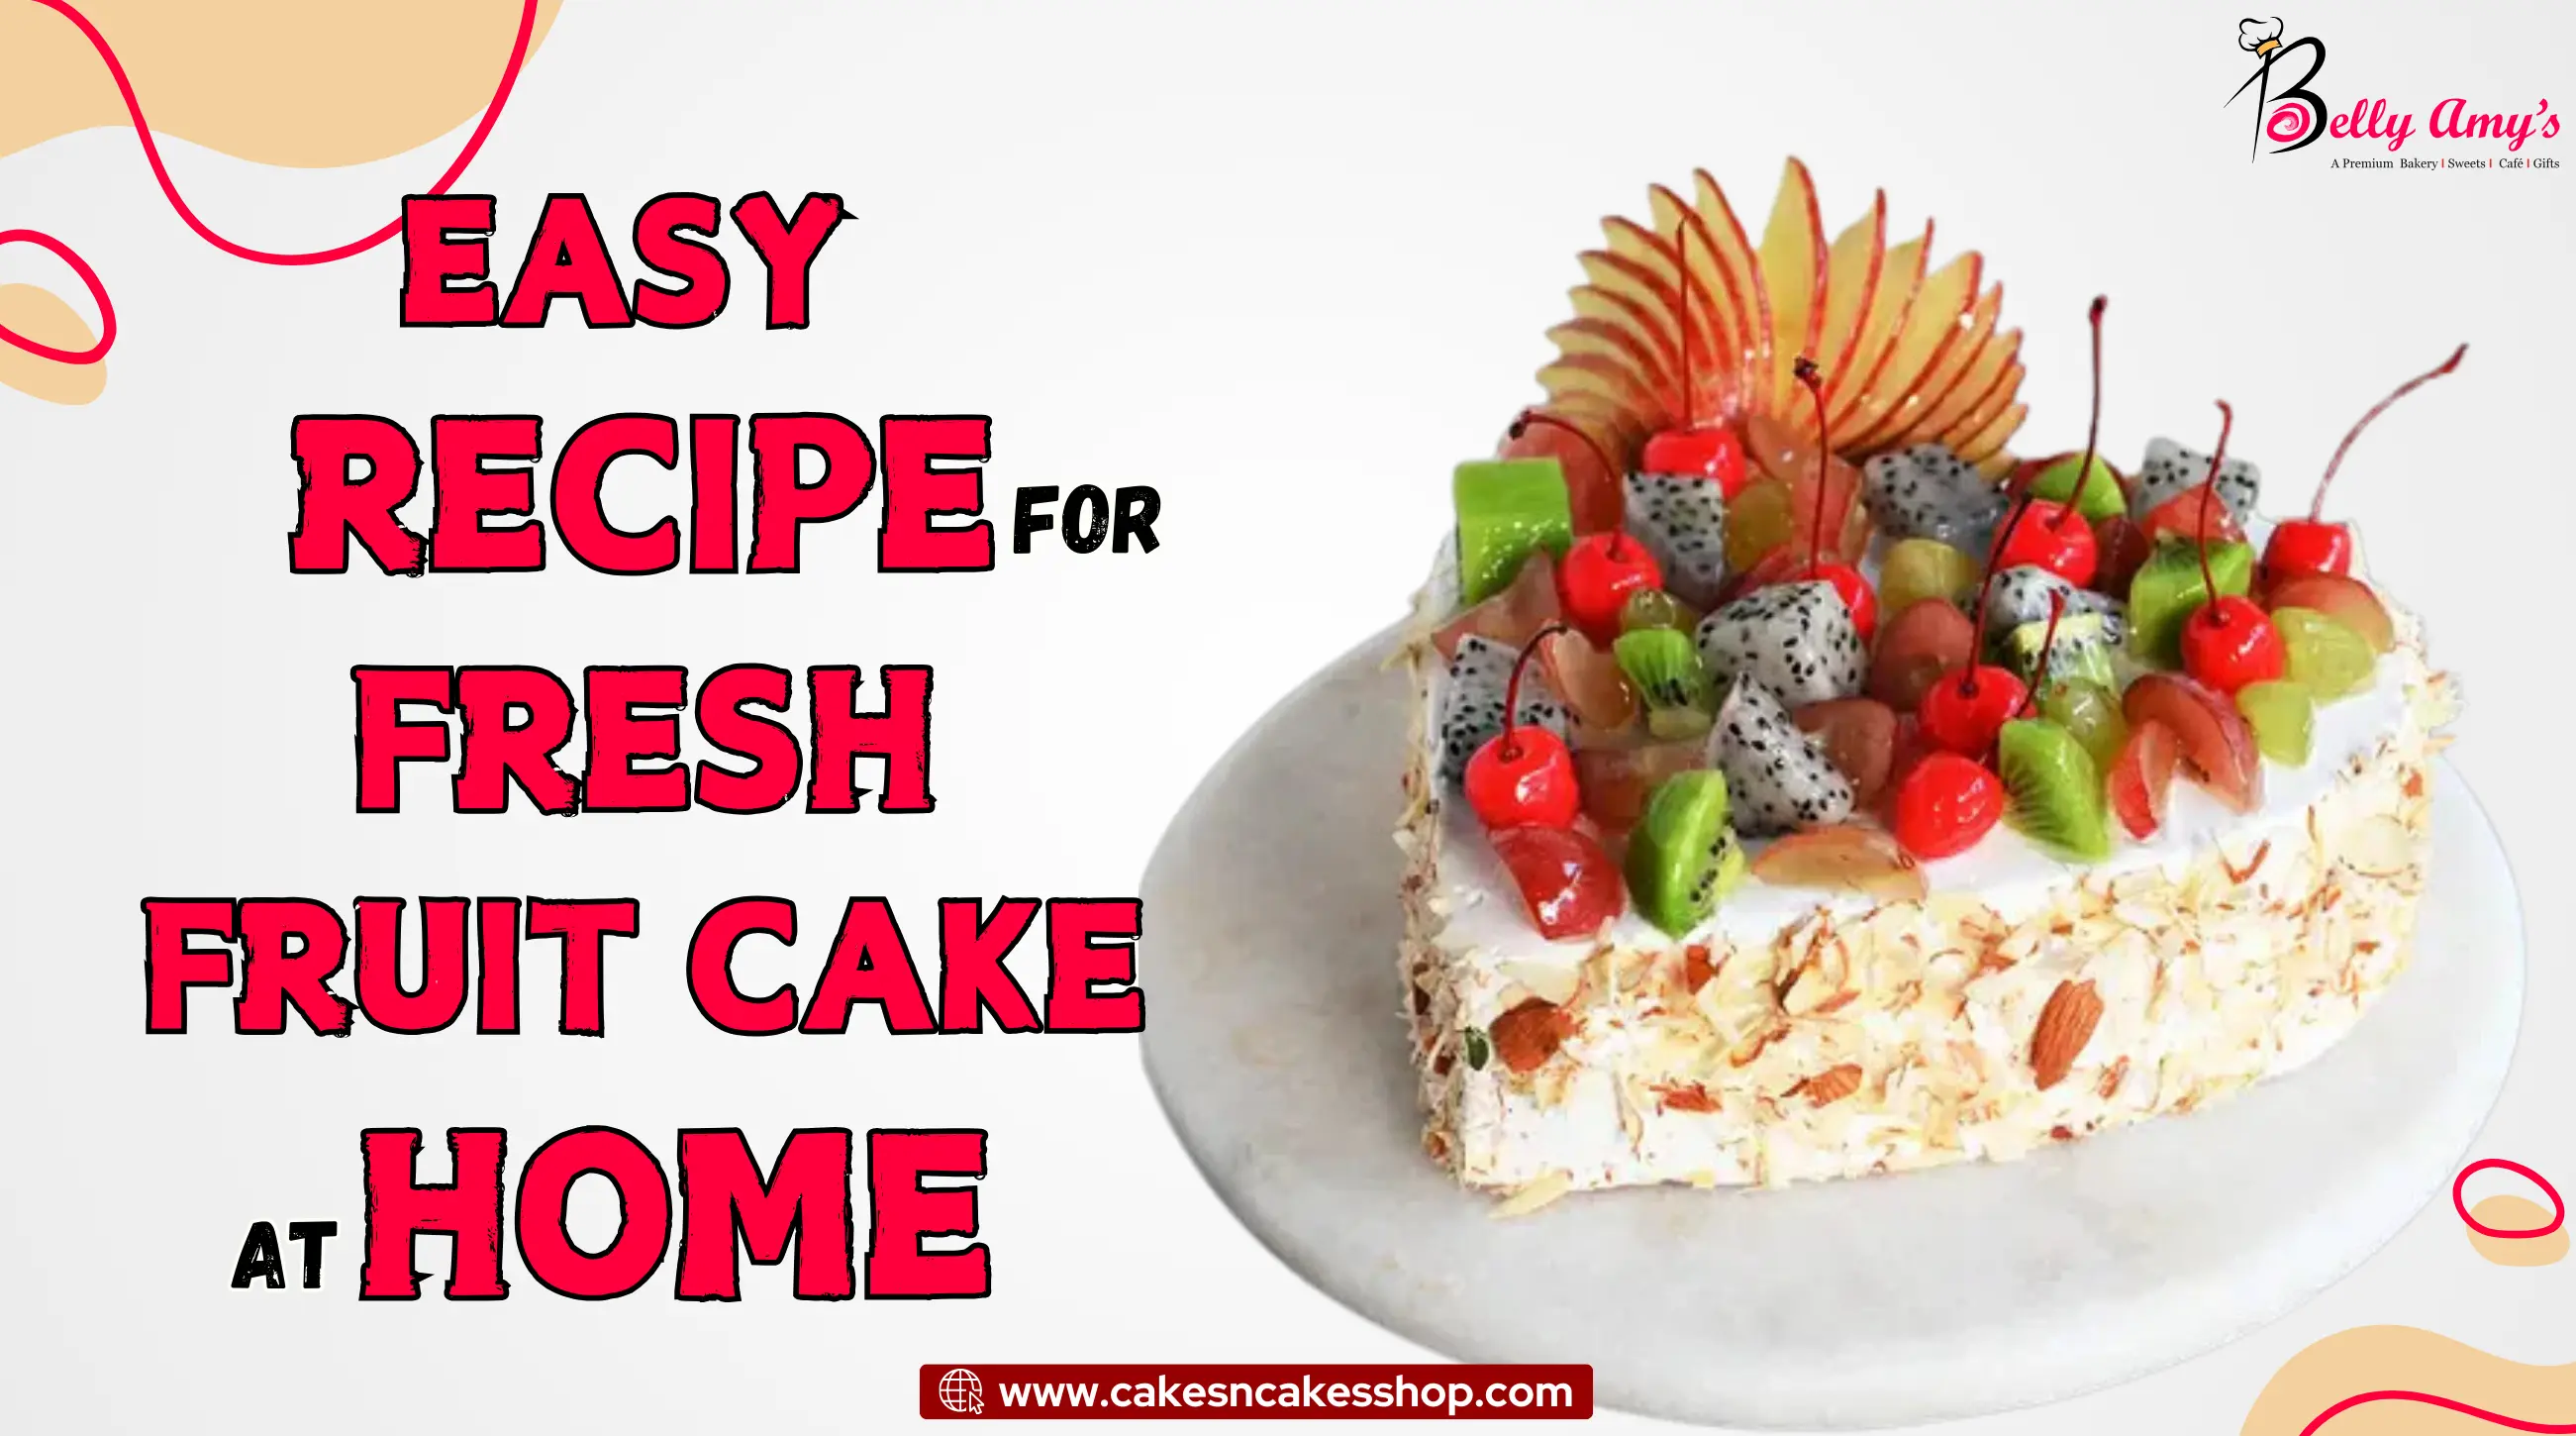 Easy Recipe for Fresh Fruit Cake at Home